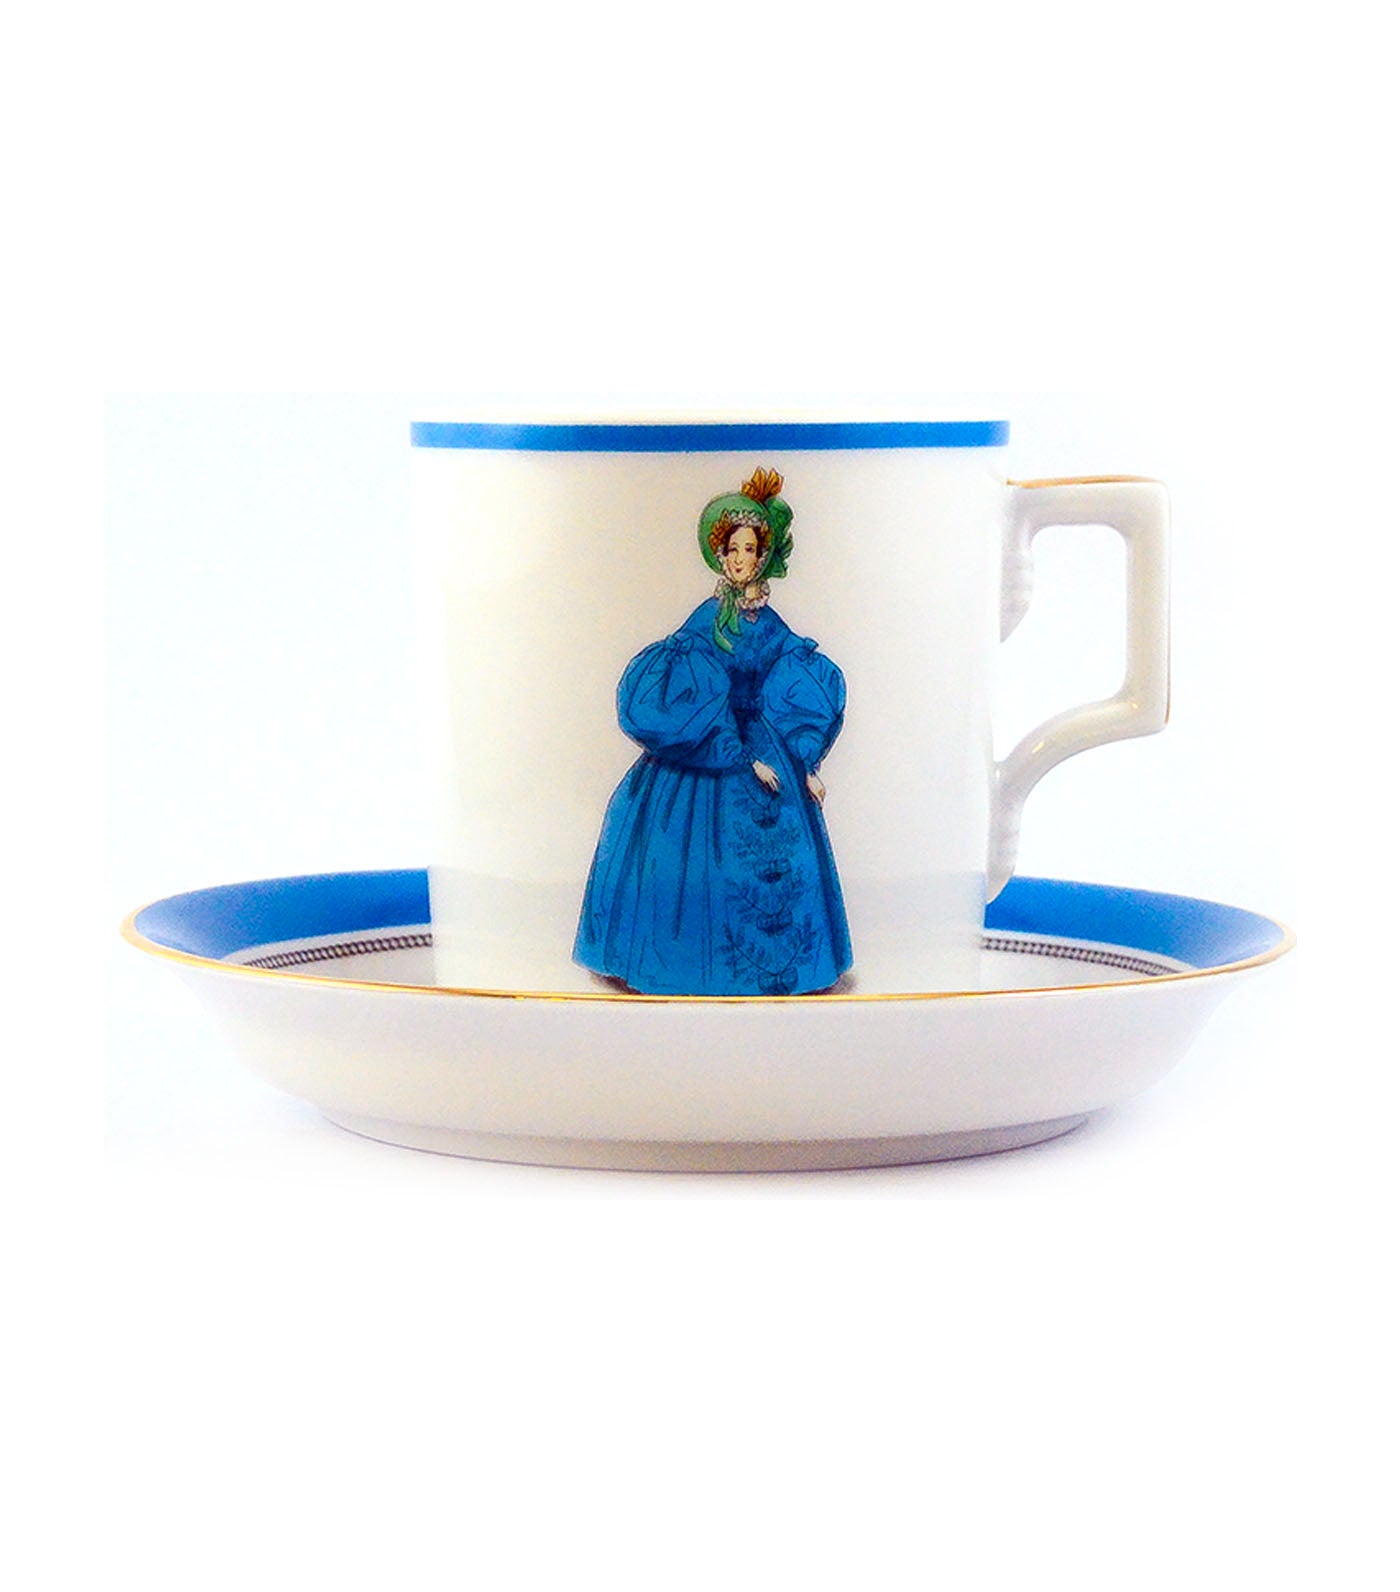 imperial porcelain modes de paris 1836 teacup and saucer heraldic